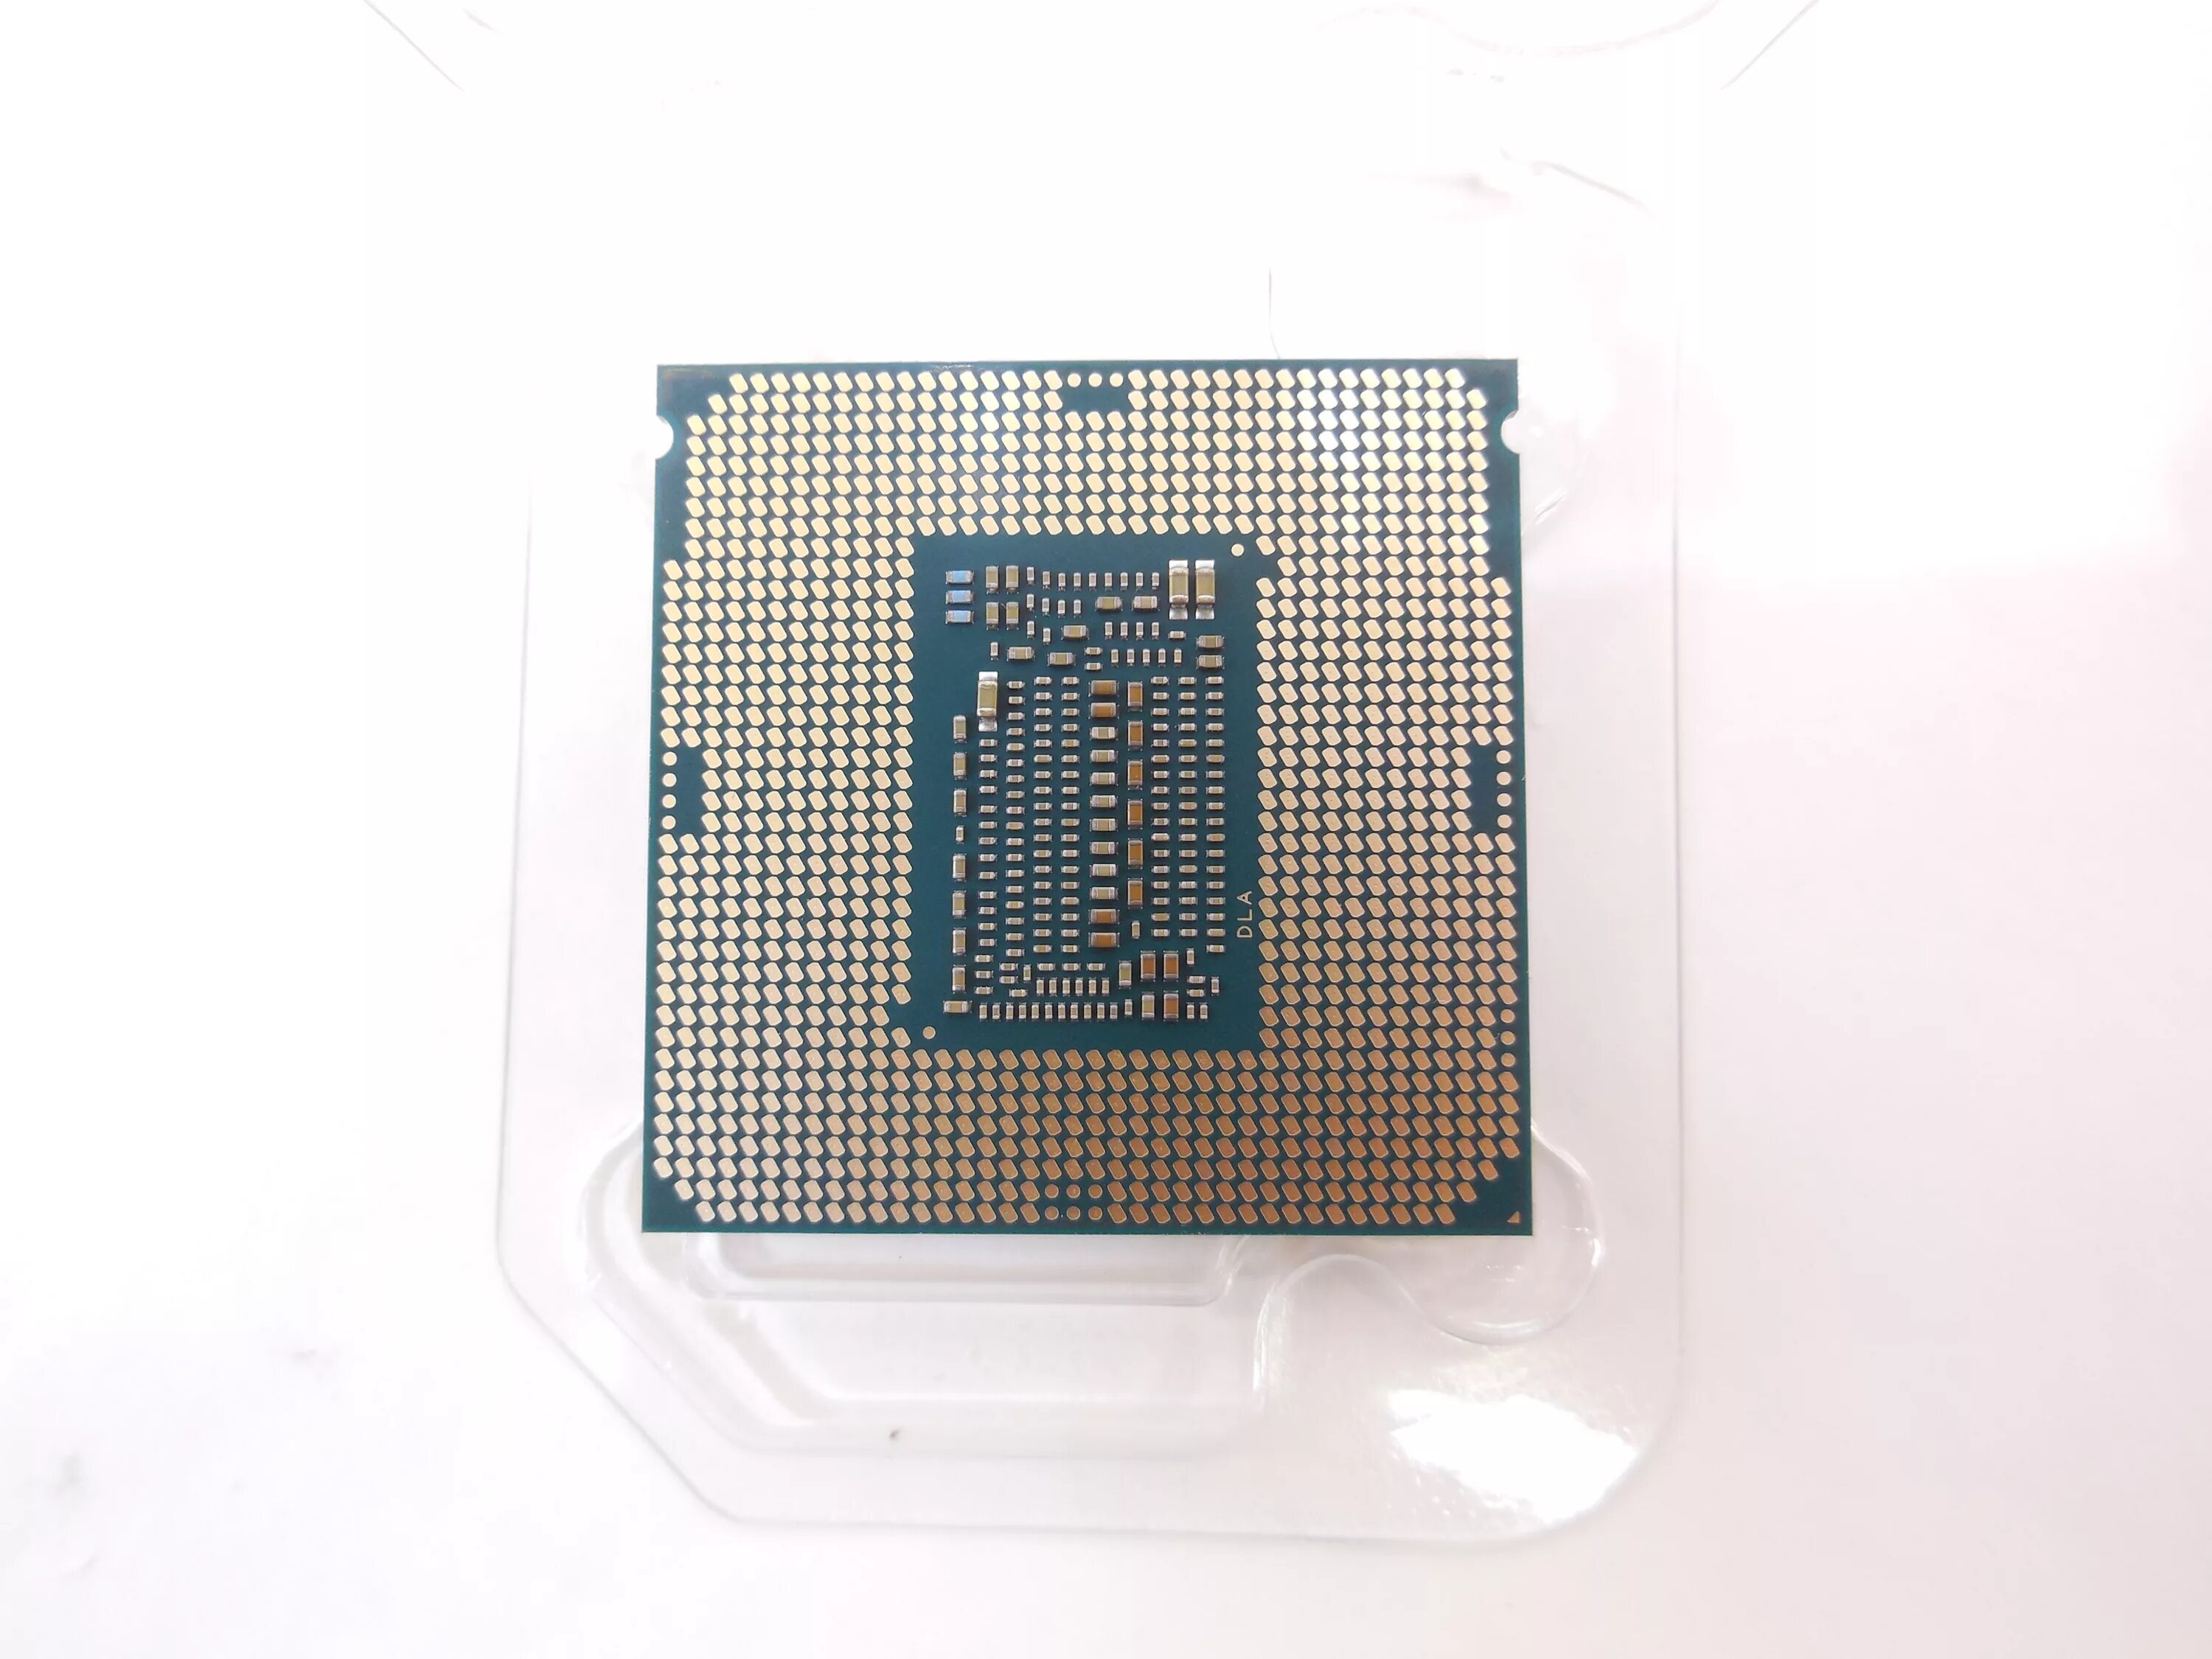 Процессор Intel Core i7-9700k. I7 9700k. Intel Core i7-9700 (OEM). Intel Core i7 9700 CPU. Процессор интел коре i7